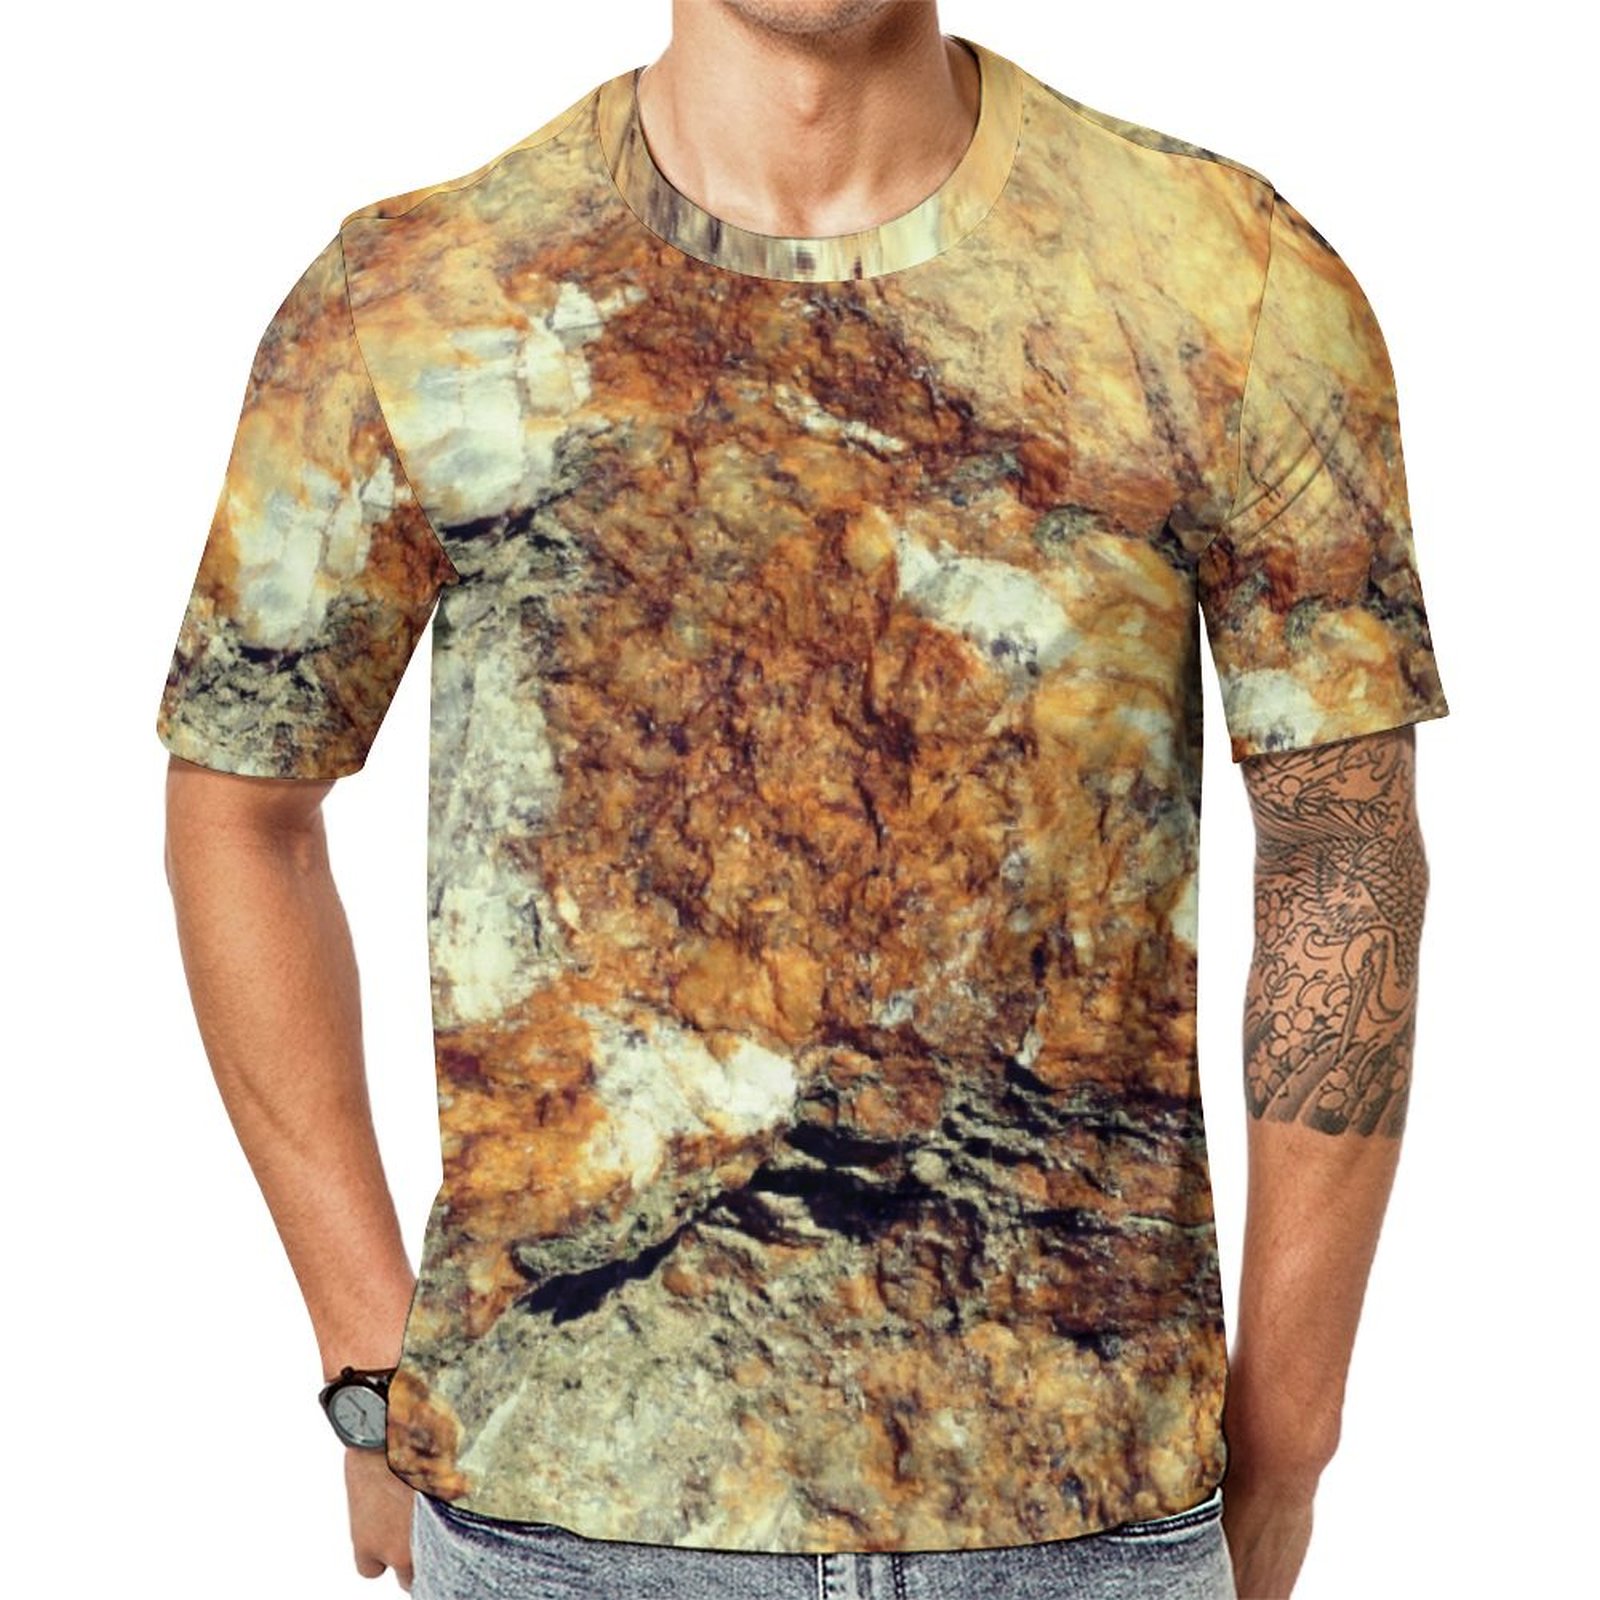 Granite And Quartz Stone Nature Short Sleeve Print Unisex Tshirt Summer Casual Tees for Men and Women Coolcoshirts